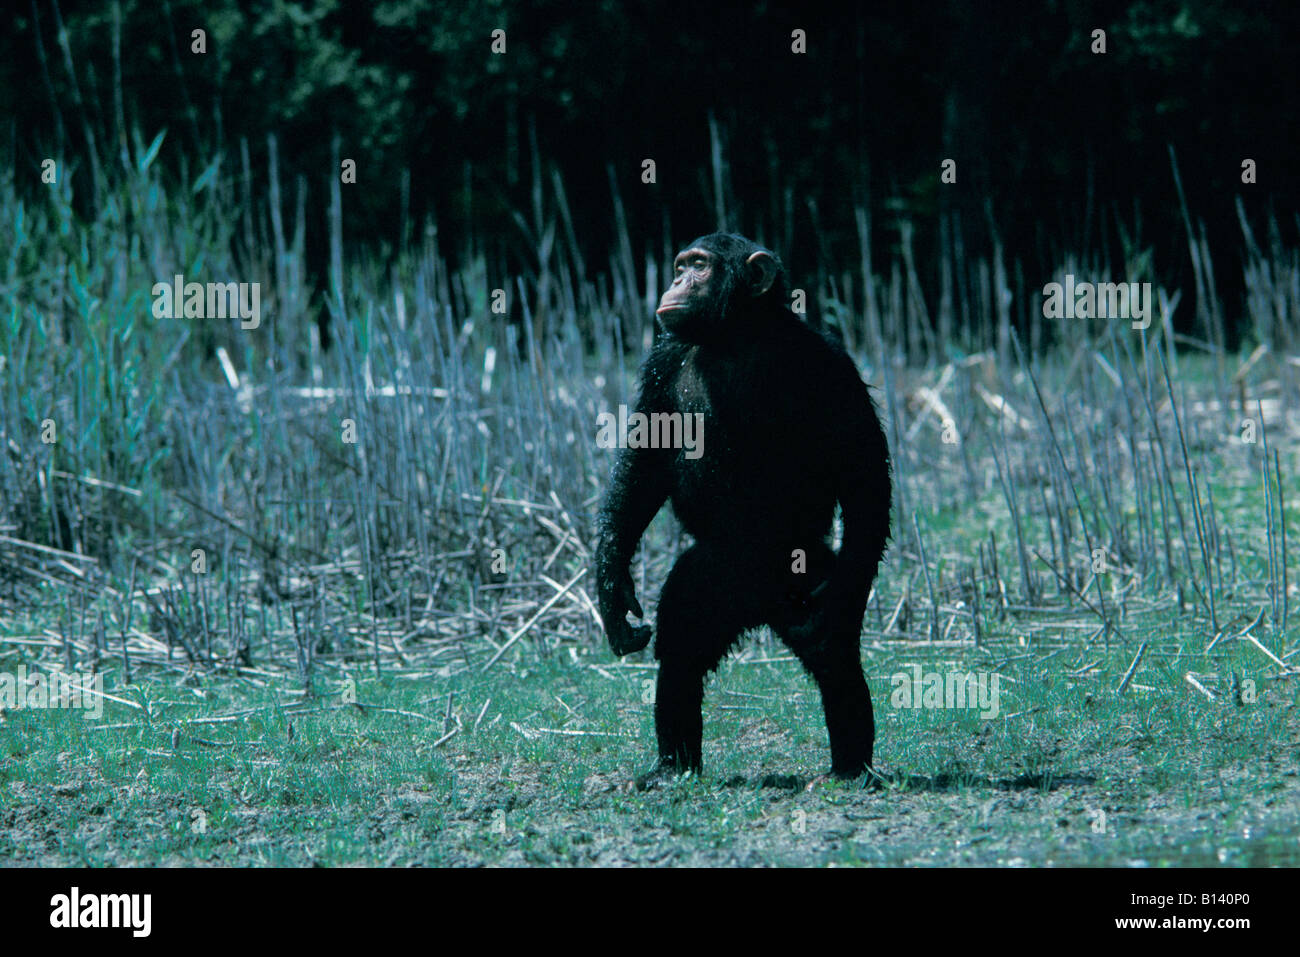 Oestlicher Schimpanse Eastern Common Chimpanzee Pan troglodytes Affen Africa Afrika animals apes behaviour chimpanzé commun chim Stock Photo